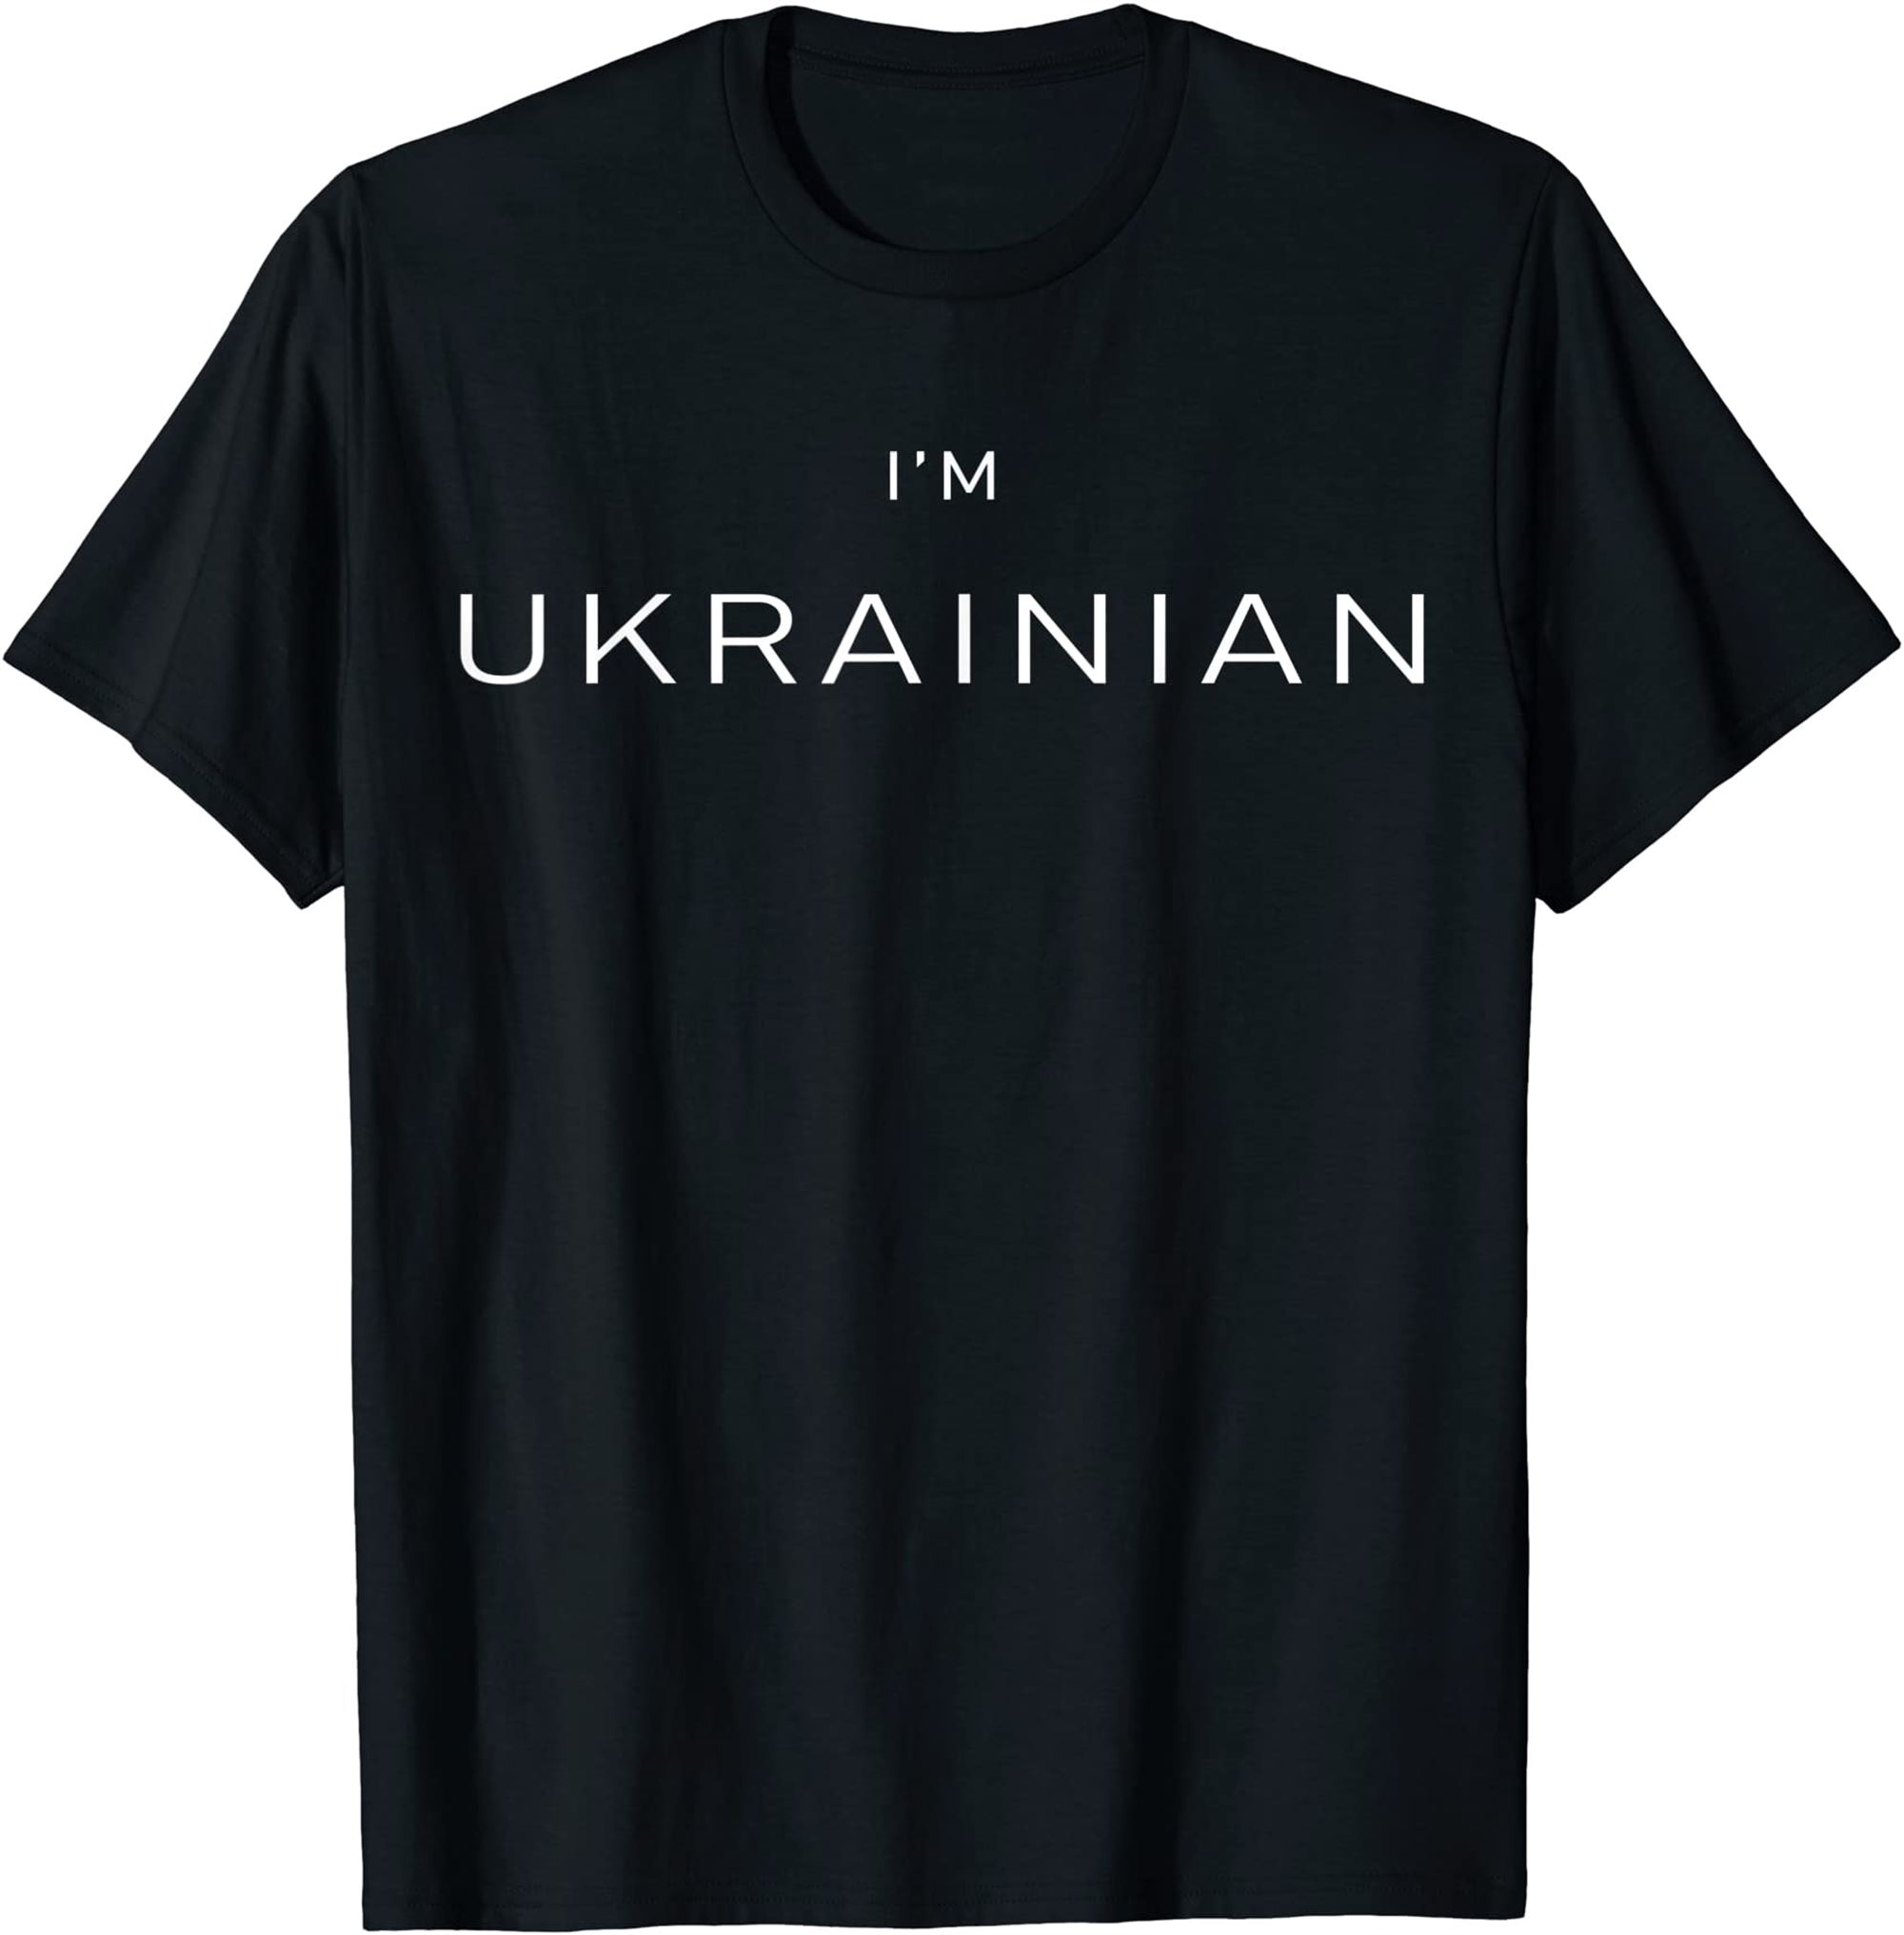 May 8th 2022 President Volodymyr Zelensky Im Ukrainian T-shirt Full Size Up To 5xl